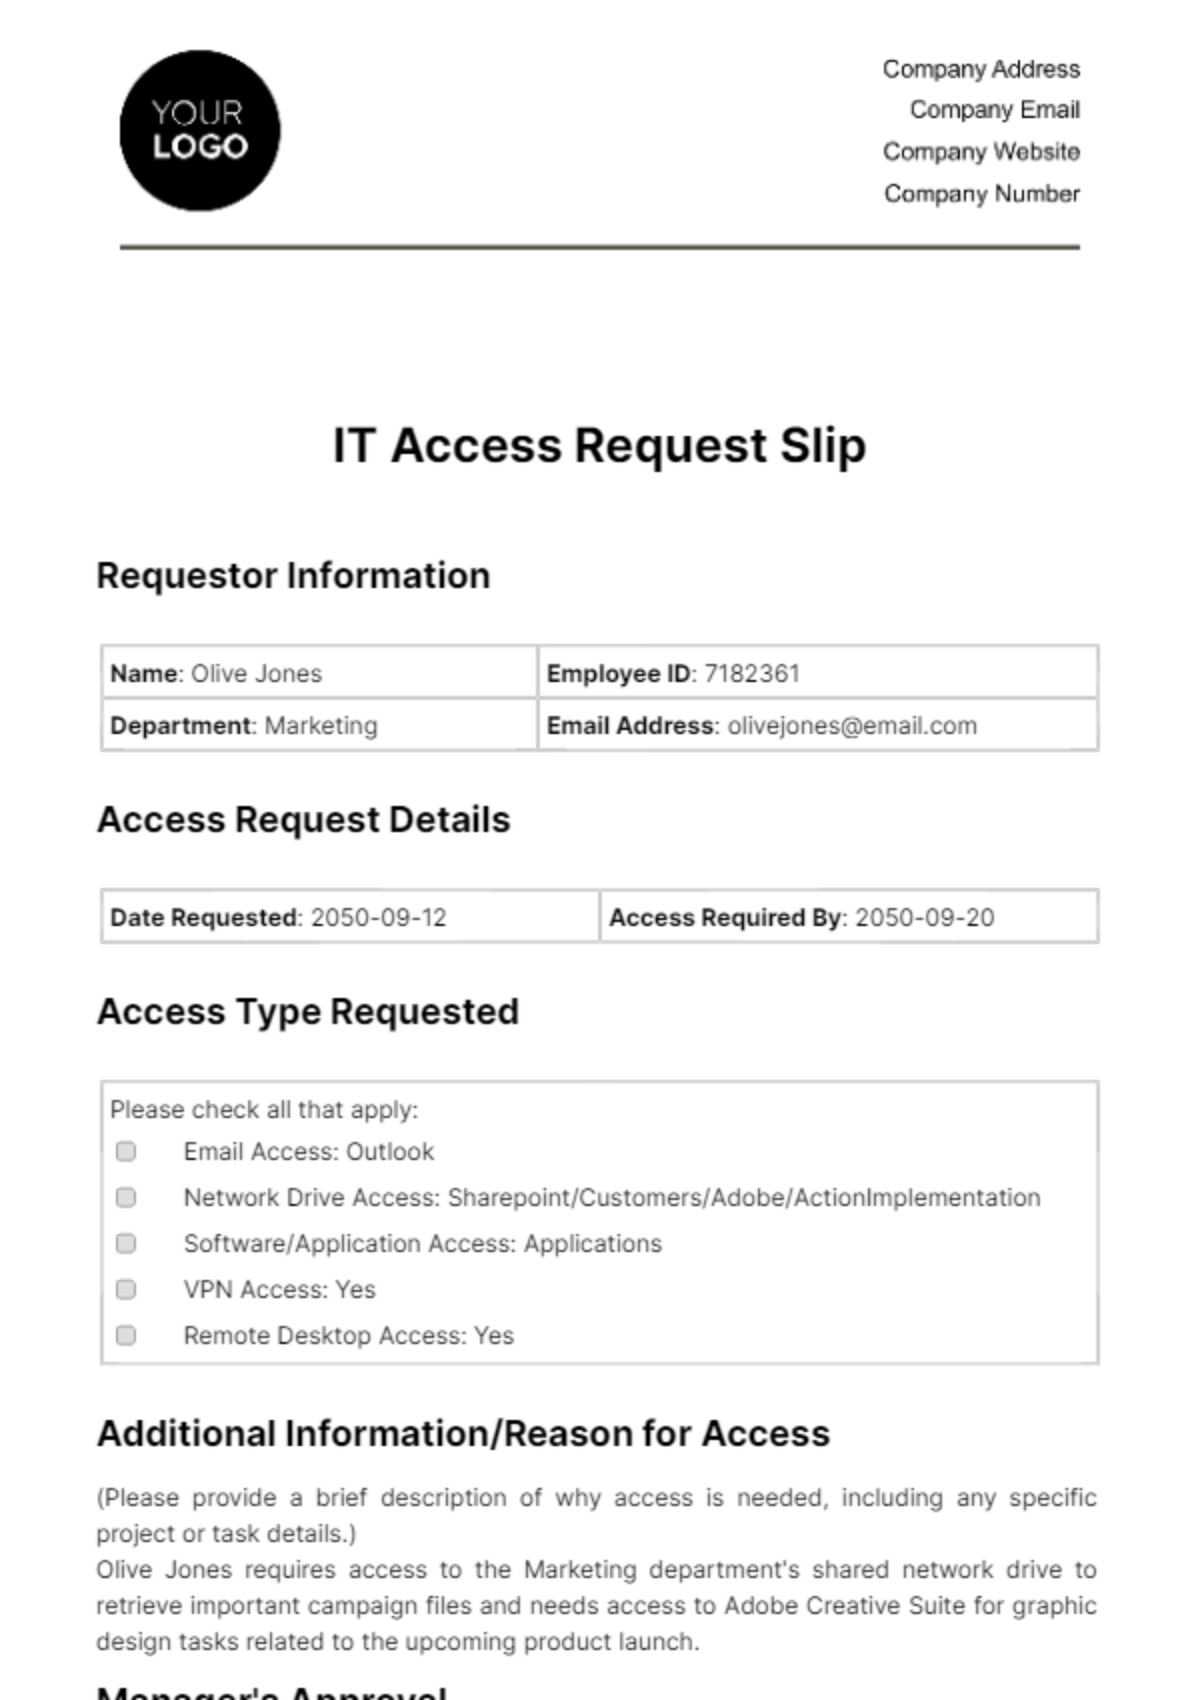 Free IT Access Request Slip HR Template